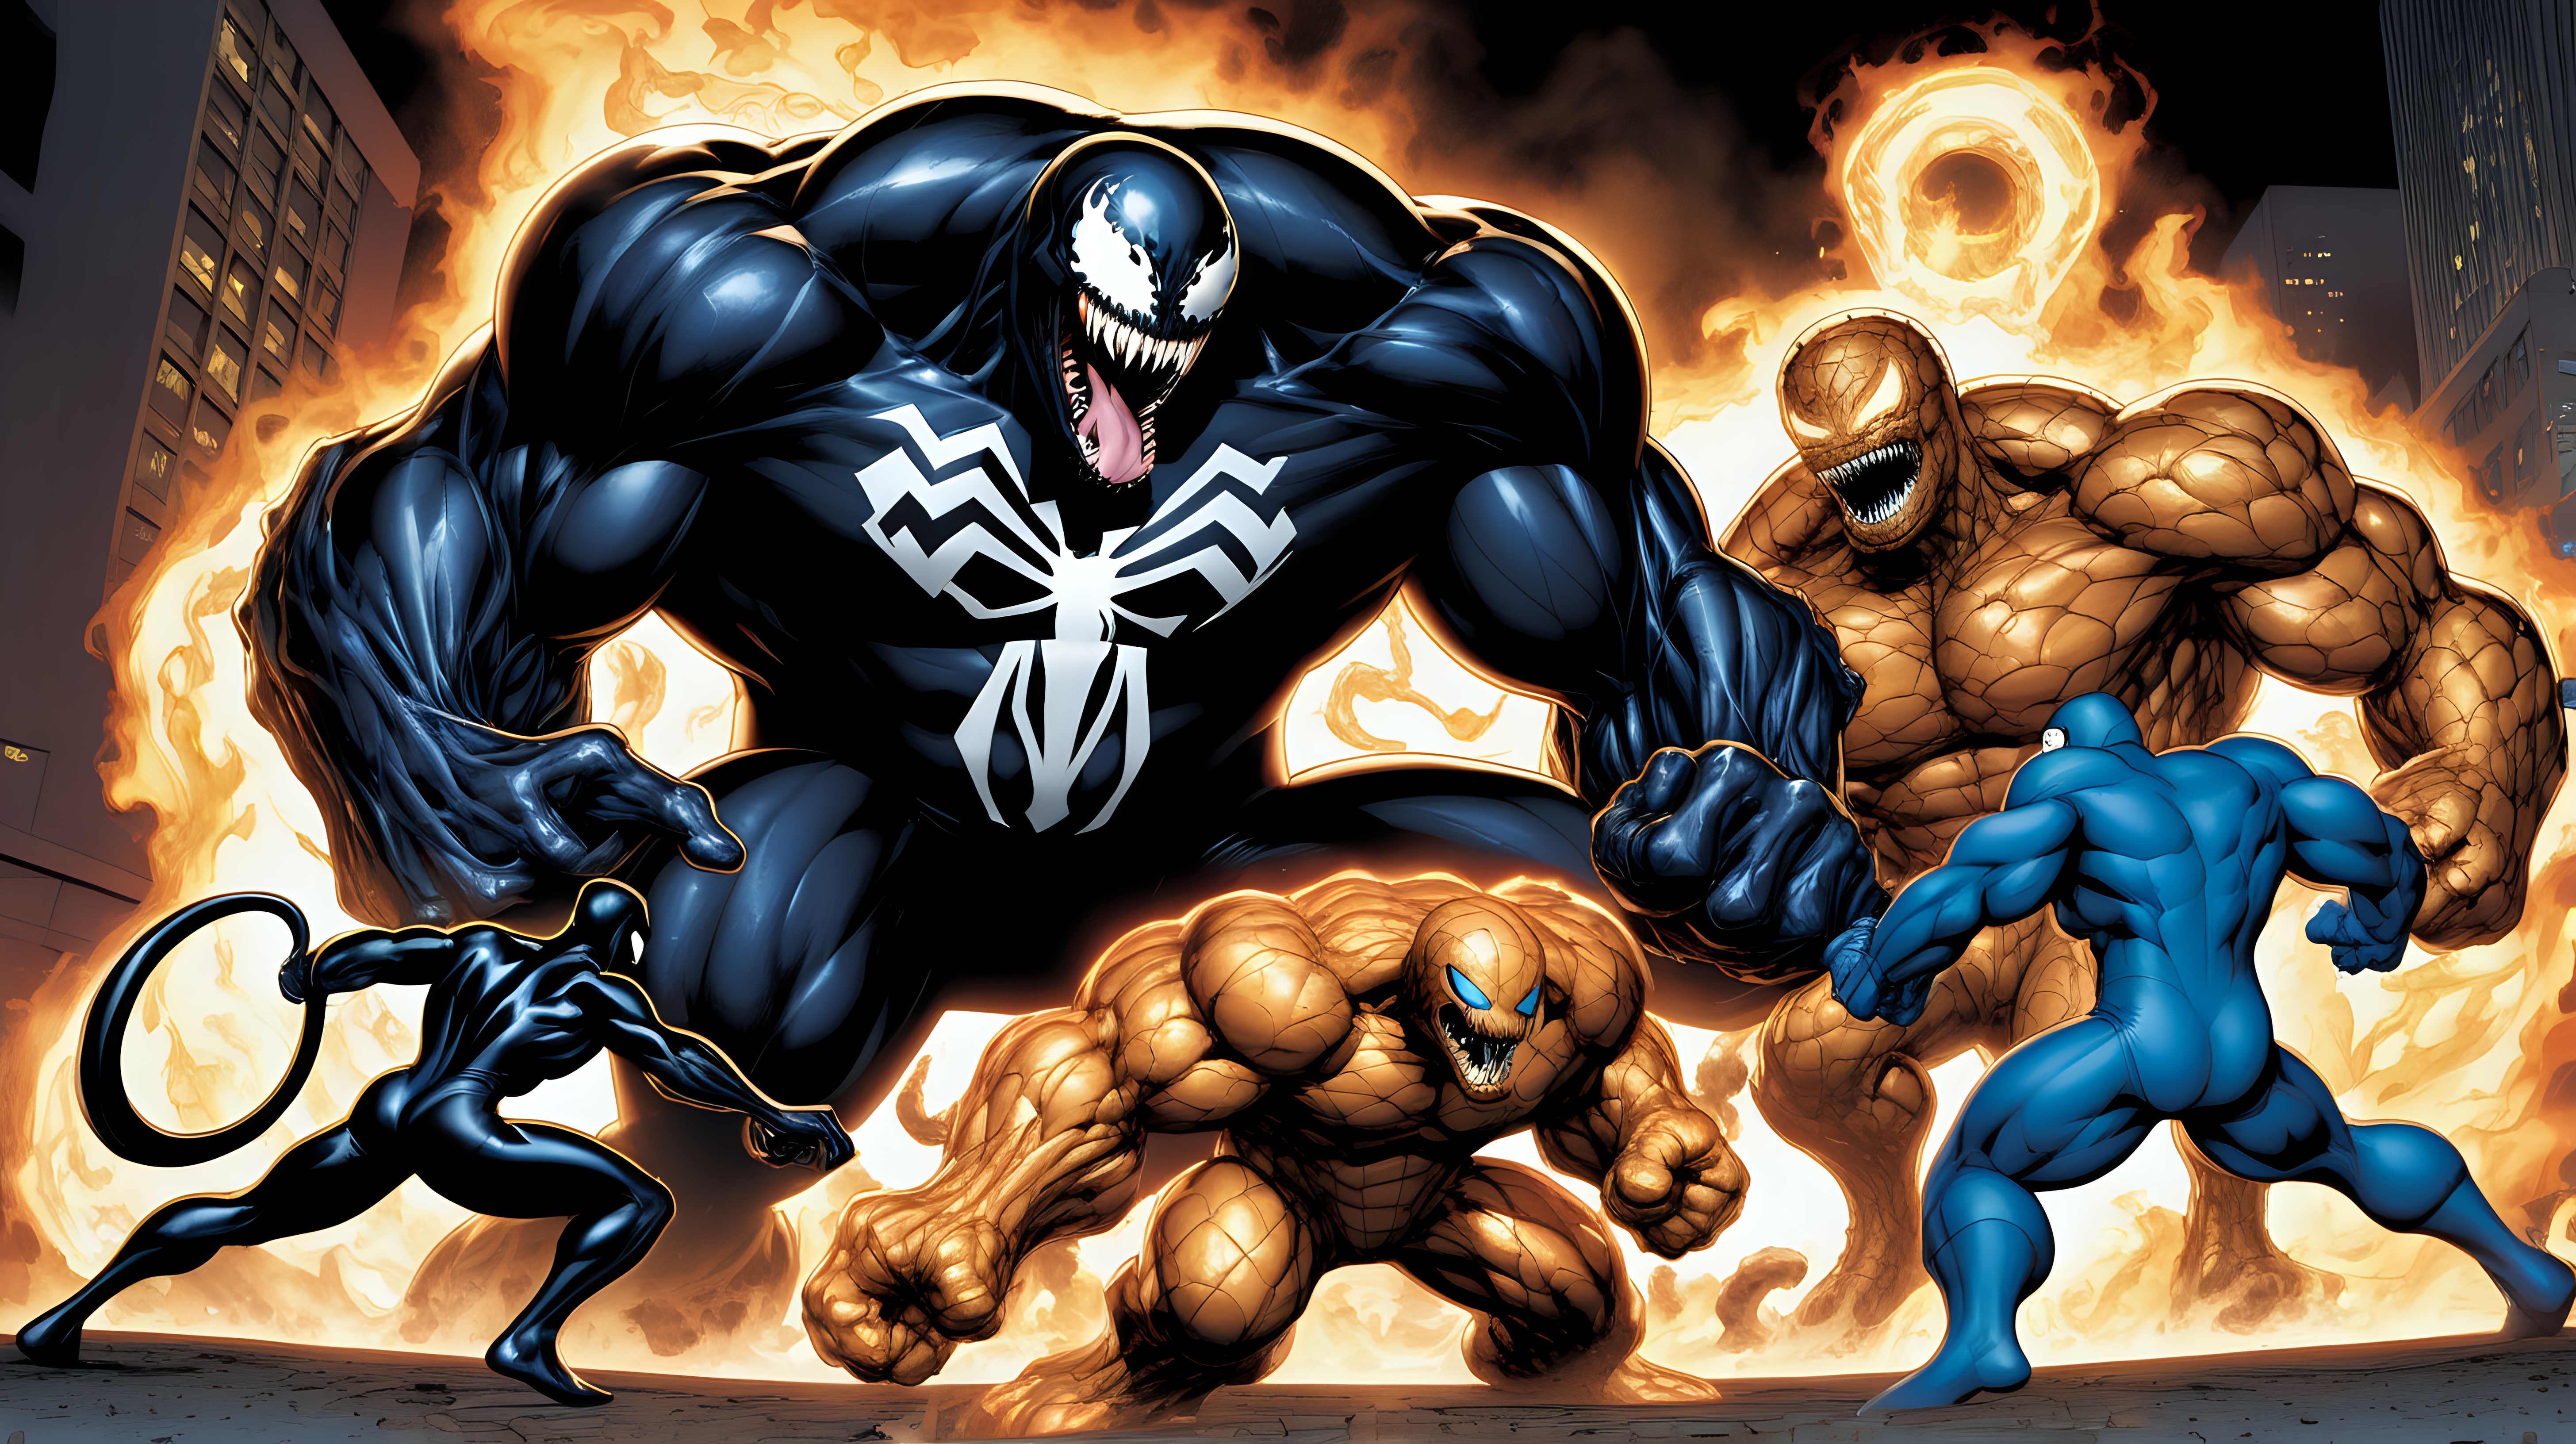 Venom vs the fantastic four